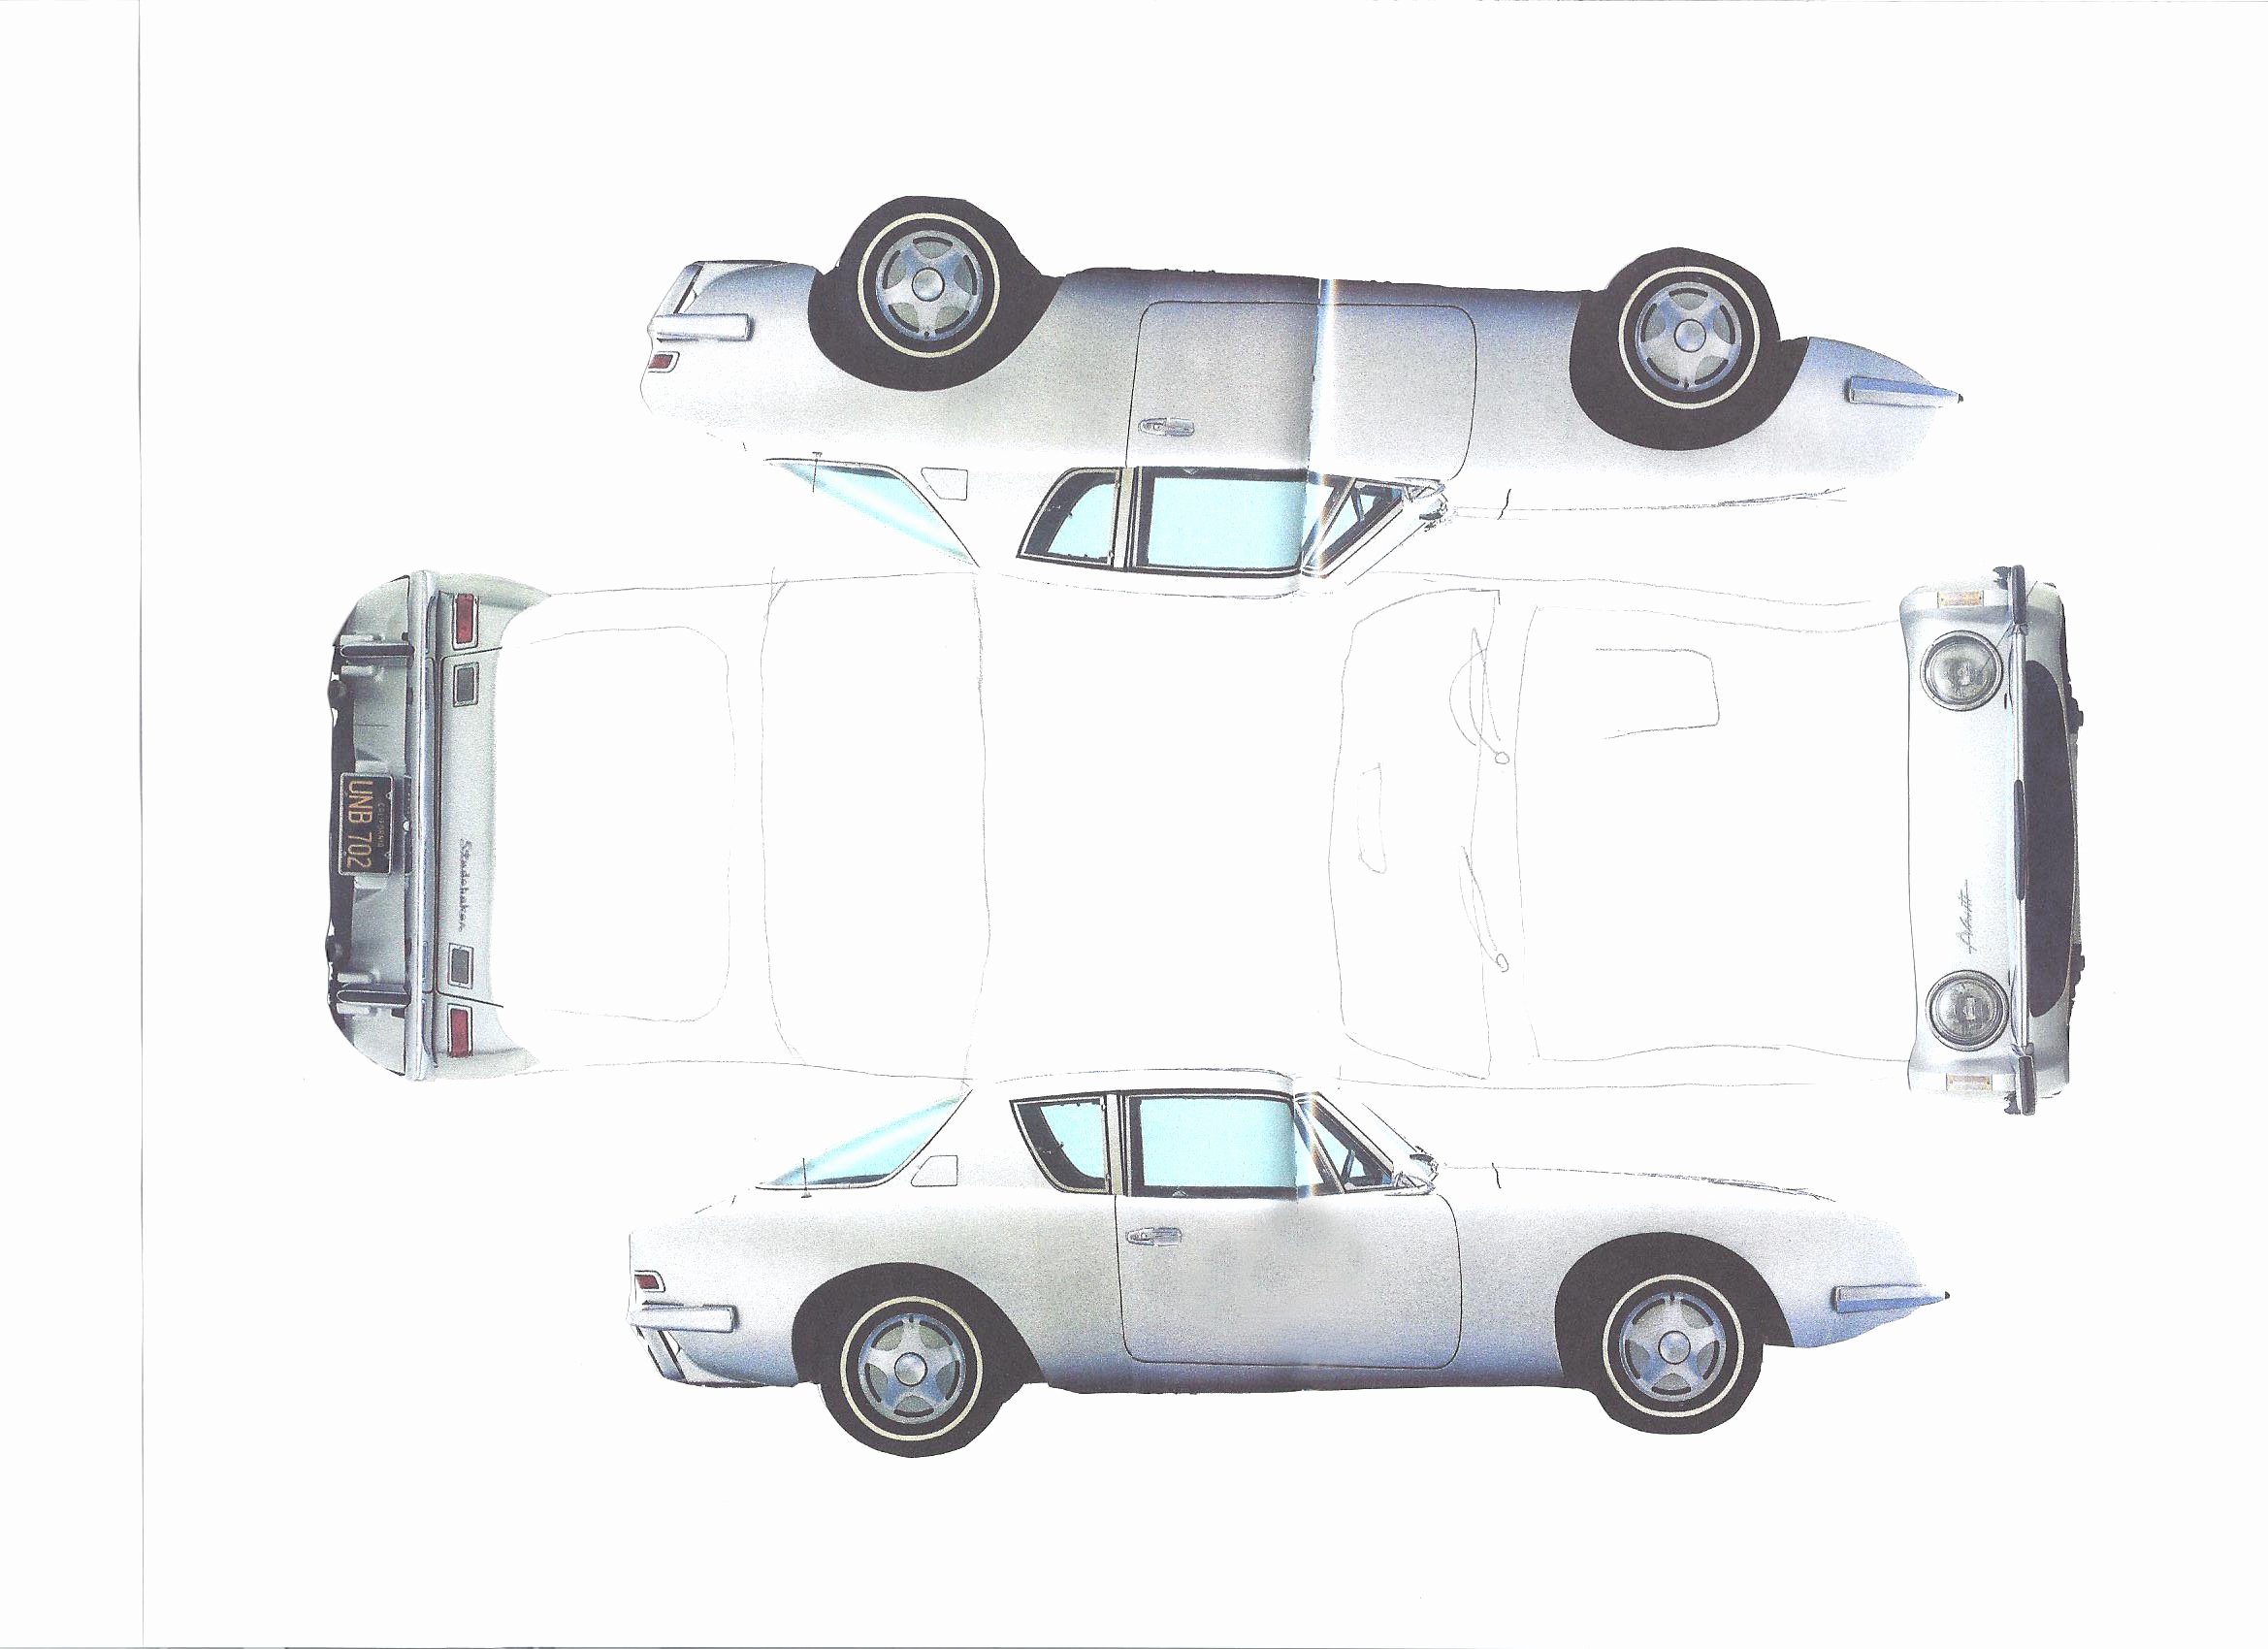 Paper Cut Out Cars Elegant Digital World and Image Studio Blog Blog Archive